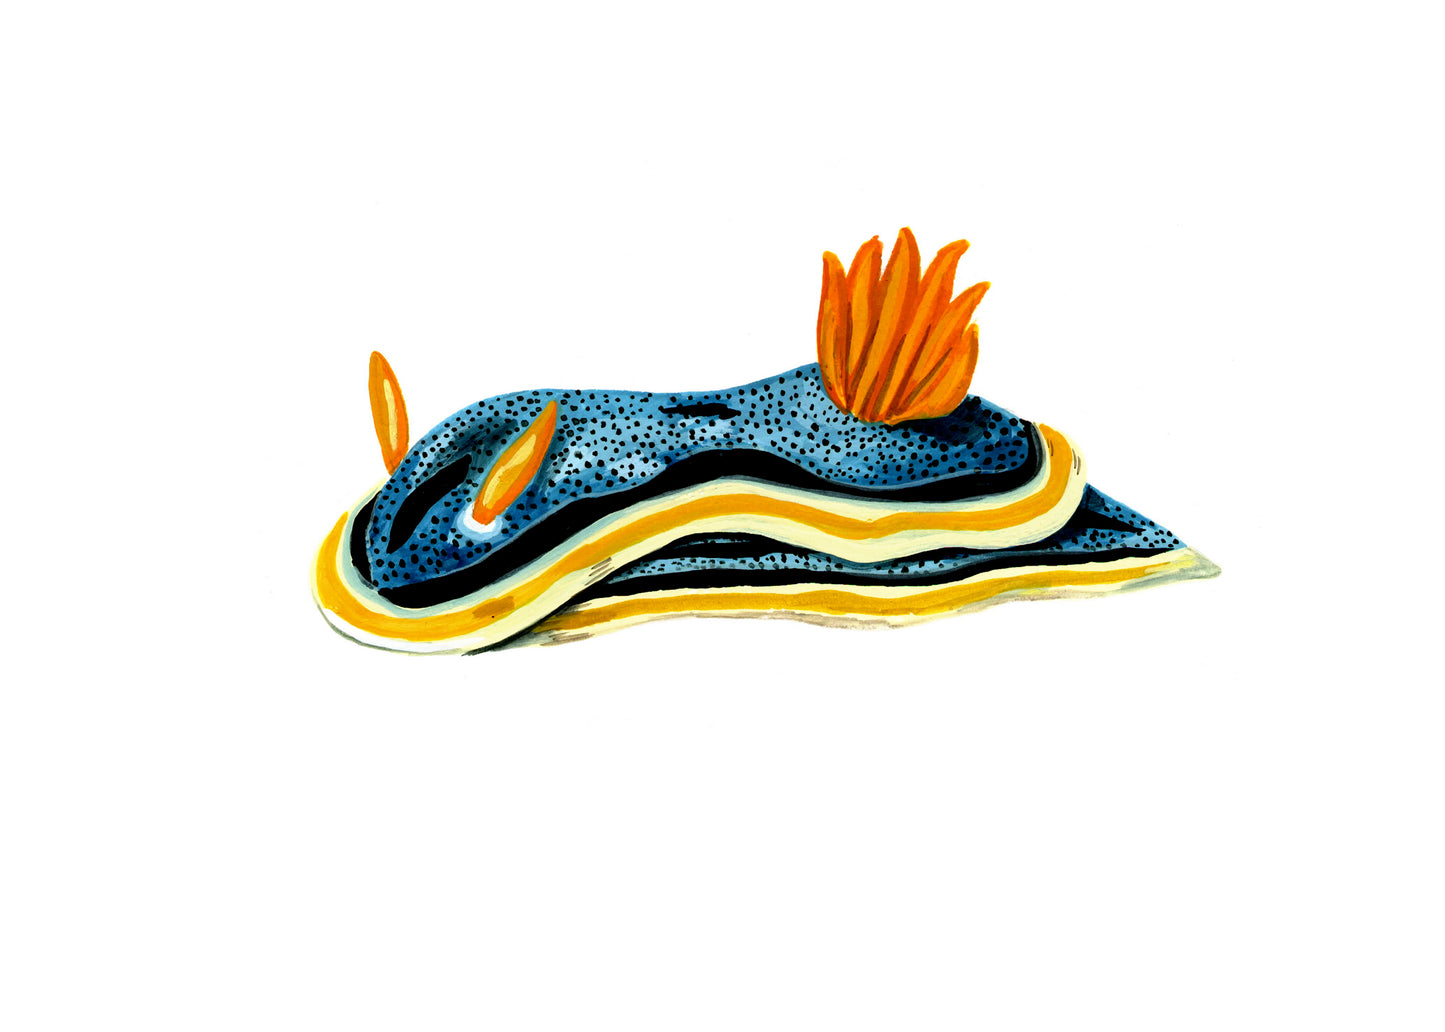 Nudibranch (sea slug) original illustrations